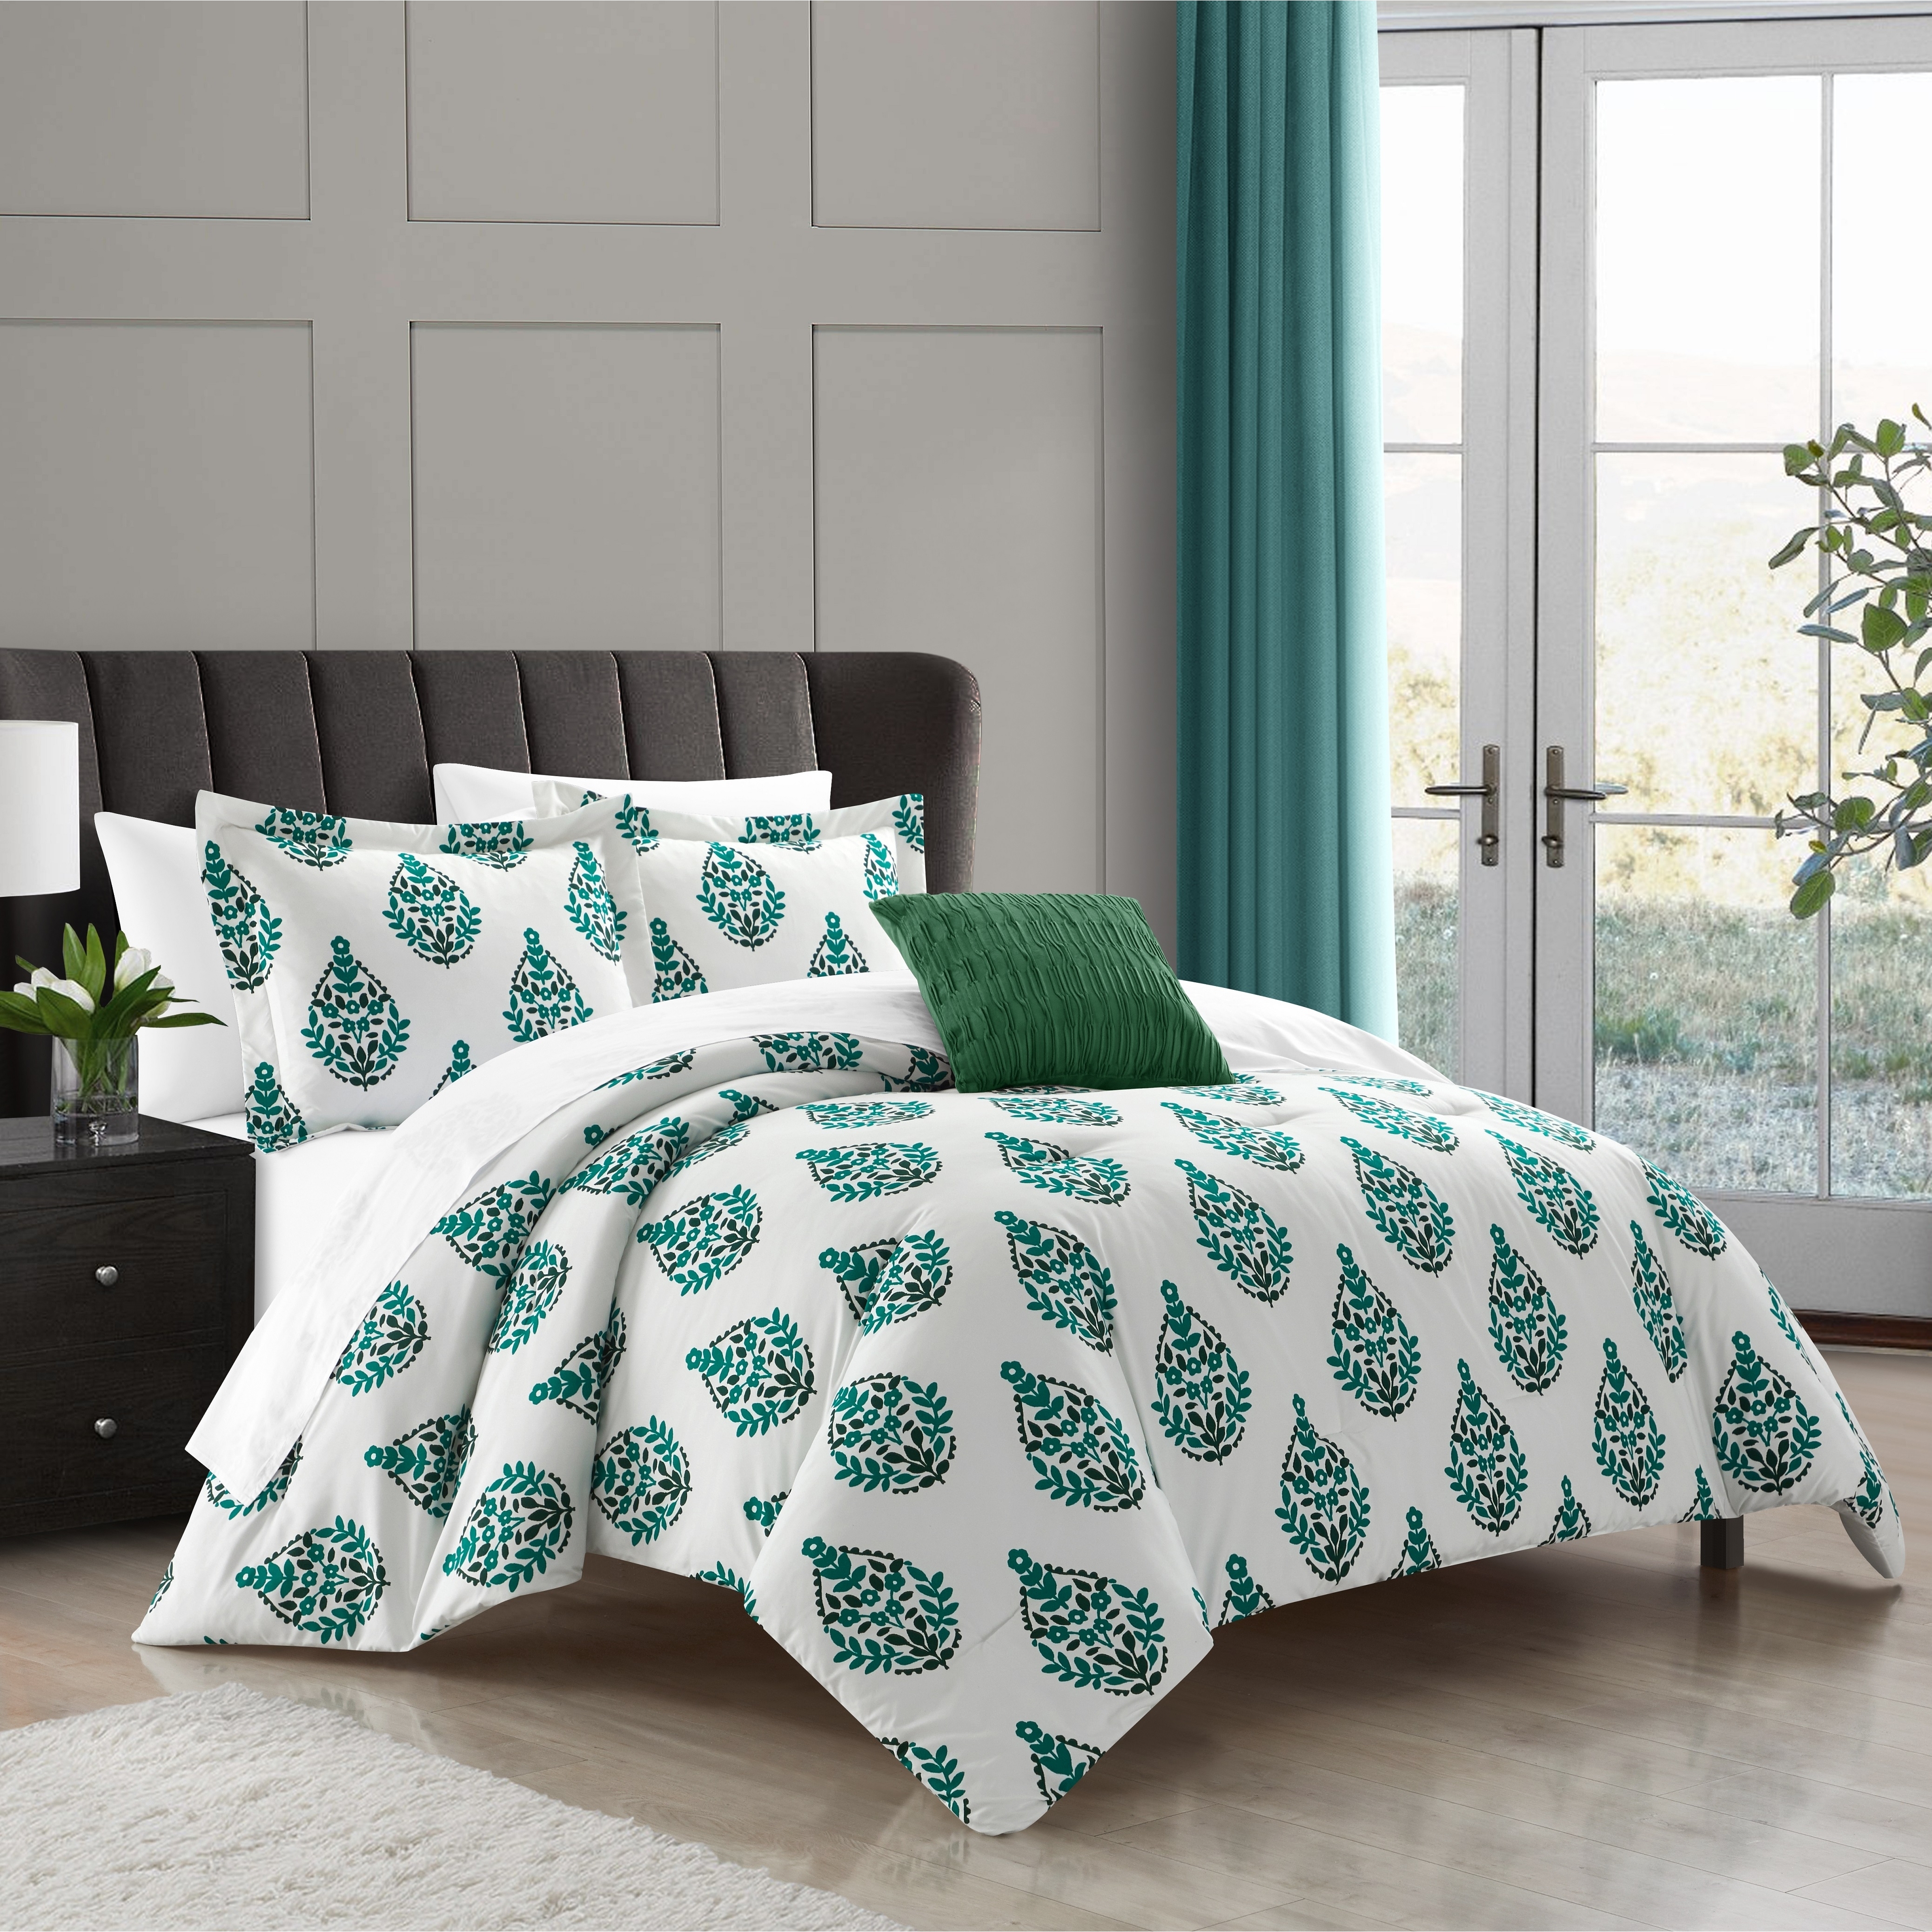 Clairessa 4 Or 3 Piece Comforter Set Floral Medallion Print Design Bedding - Green, King - 4 Piece